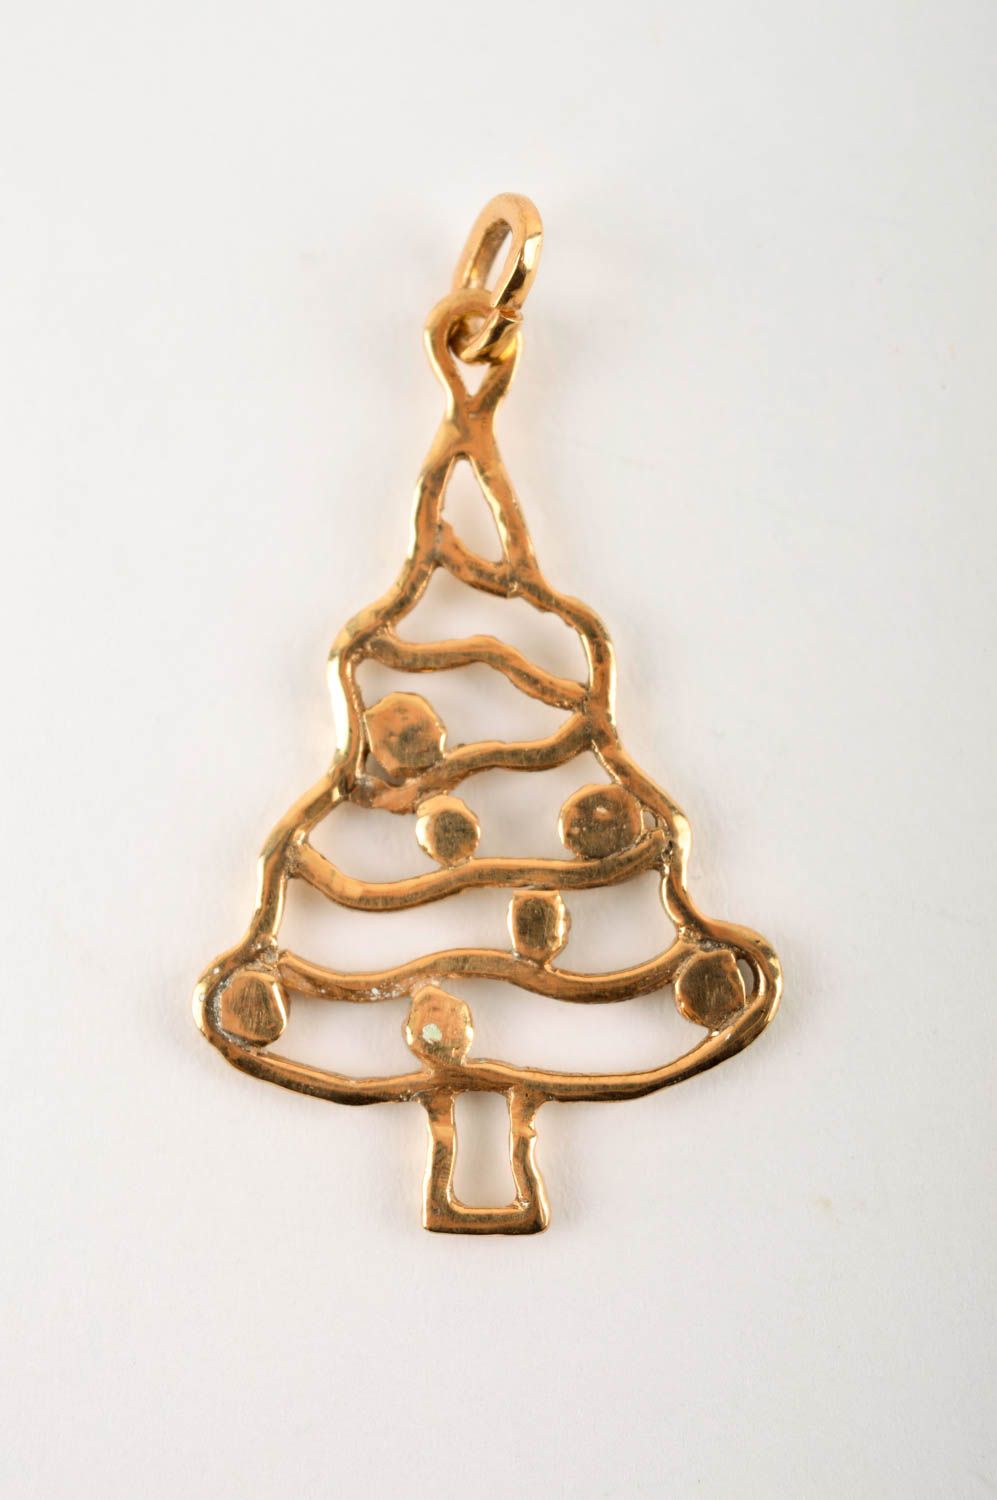 Homemade jewelry designer necklace pendant necklace Christmas gift ideas photo 3